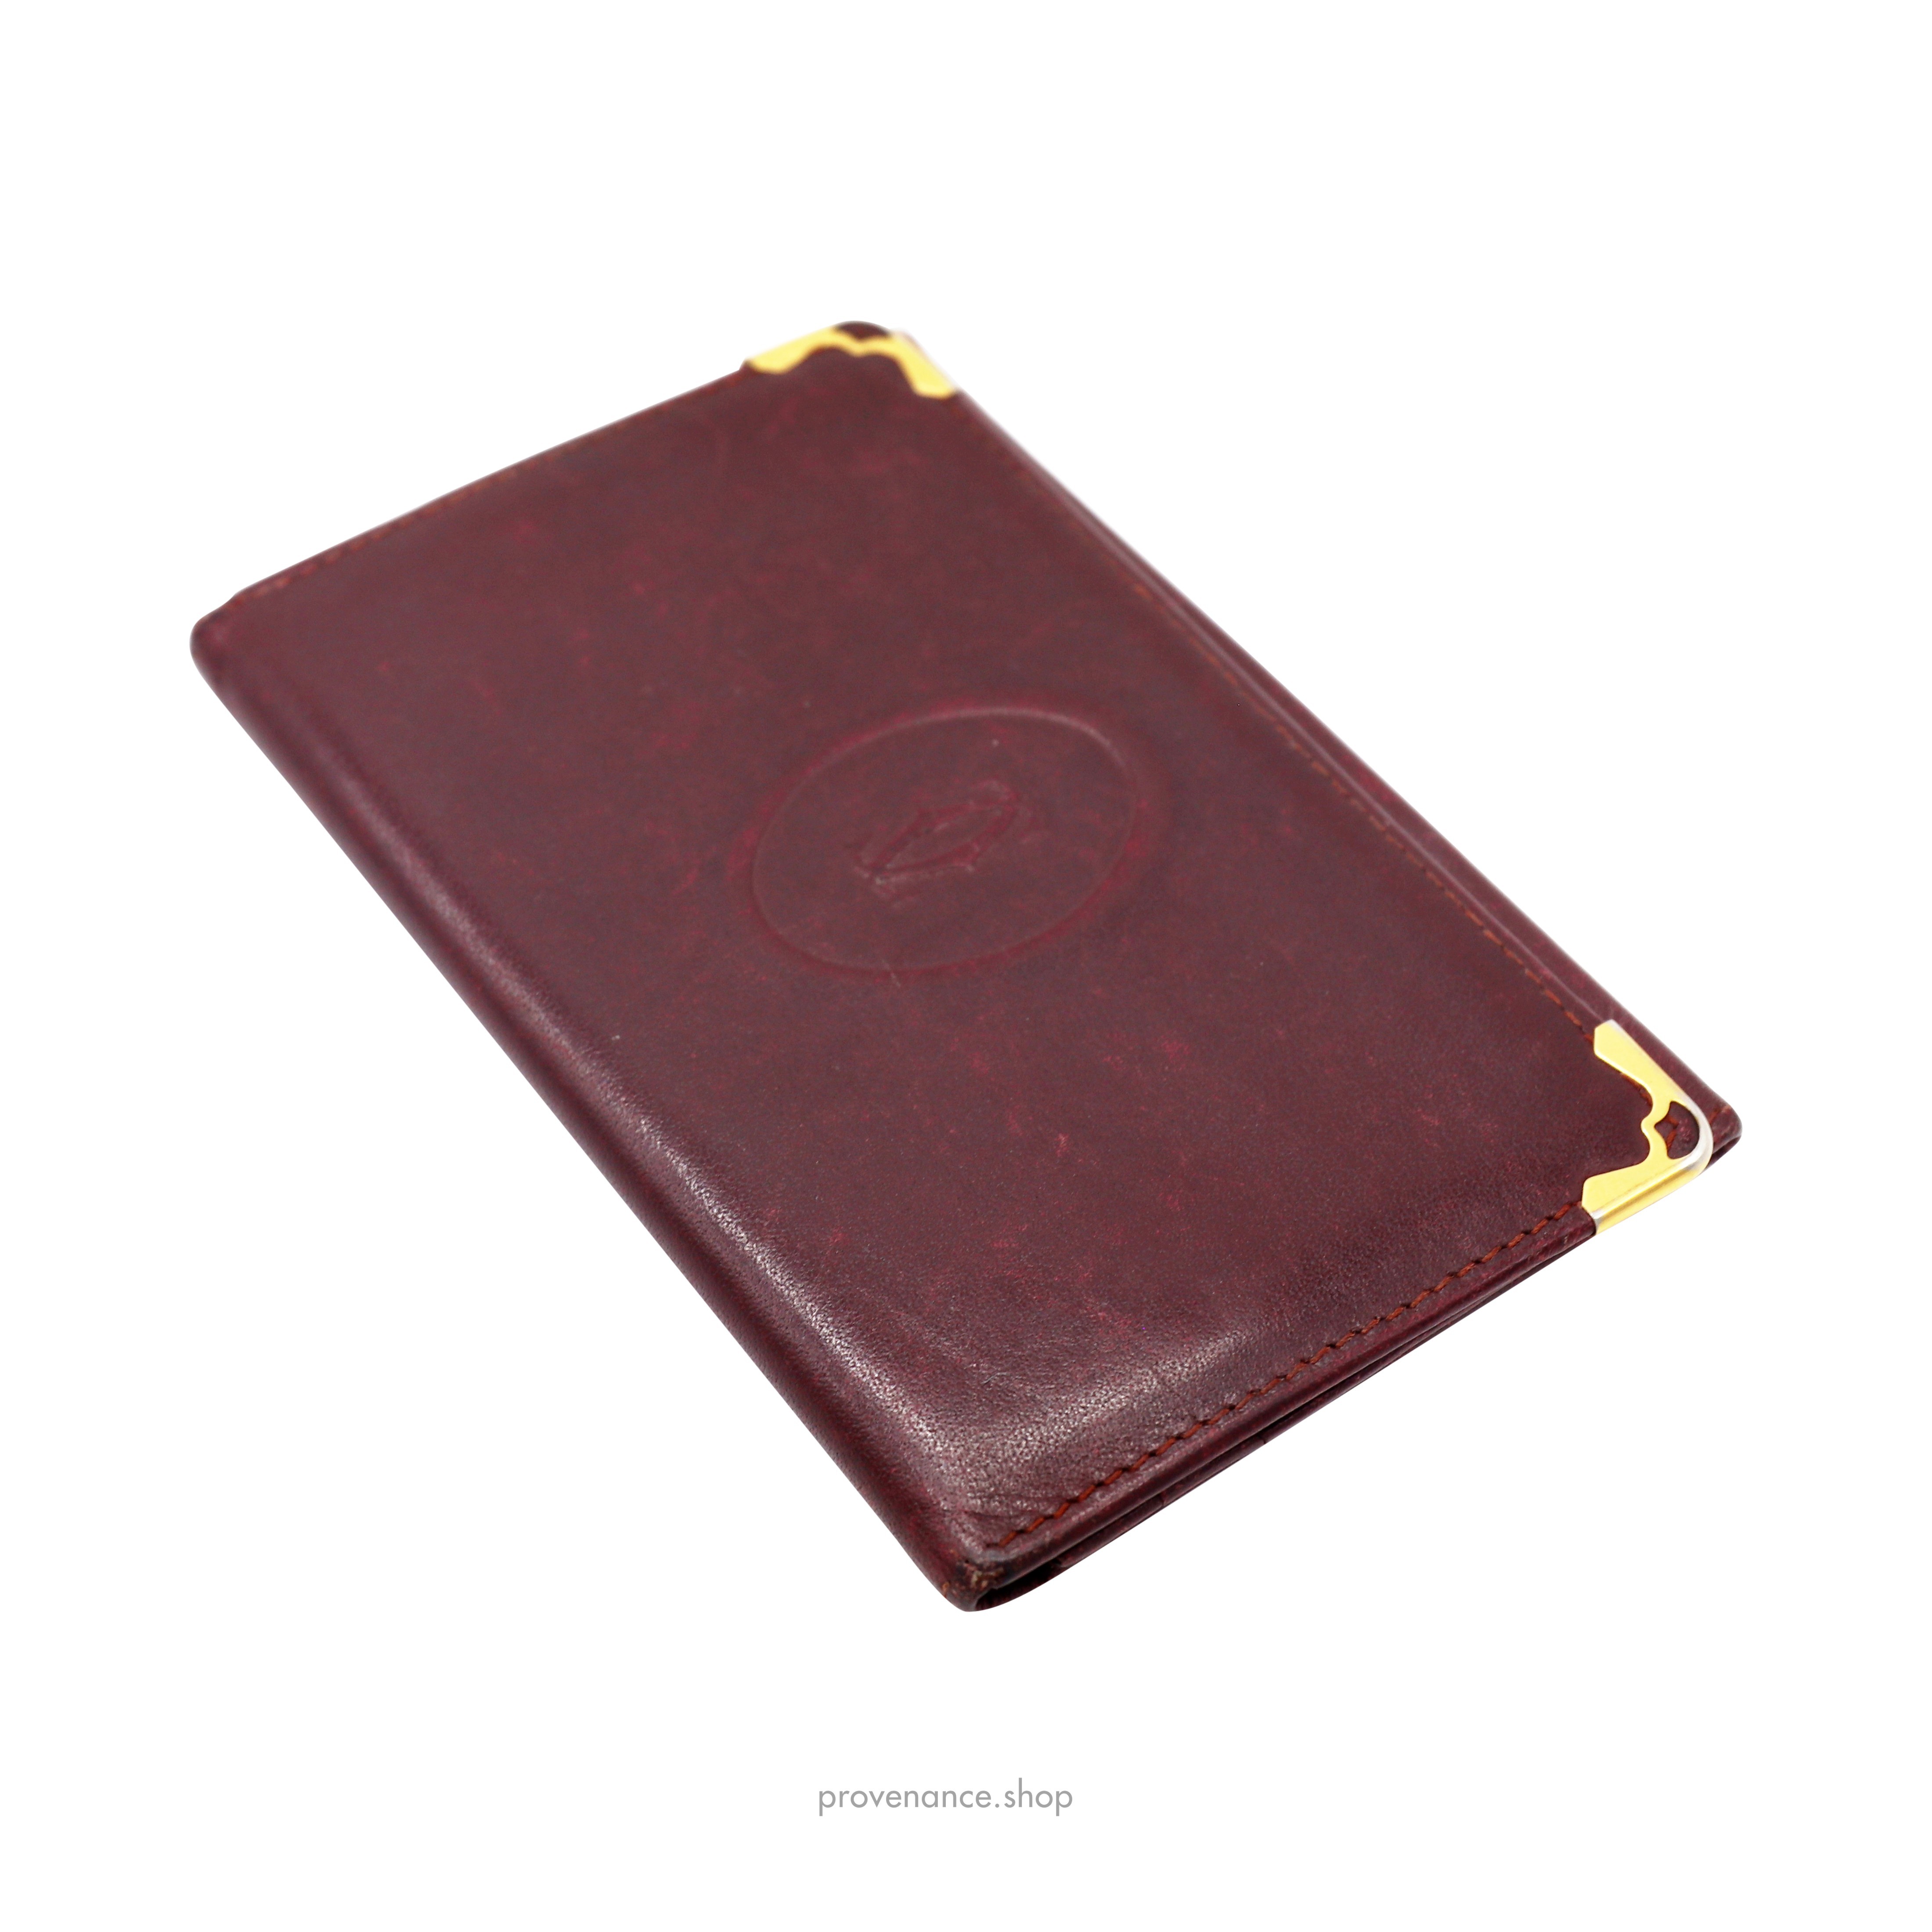 Cartier Pocket Organizer Wallet - Burgundy Leather - 3